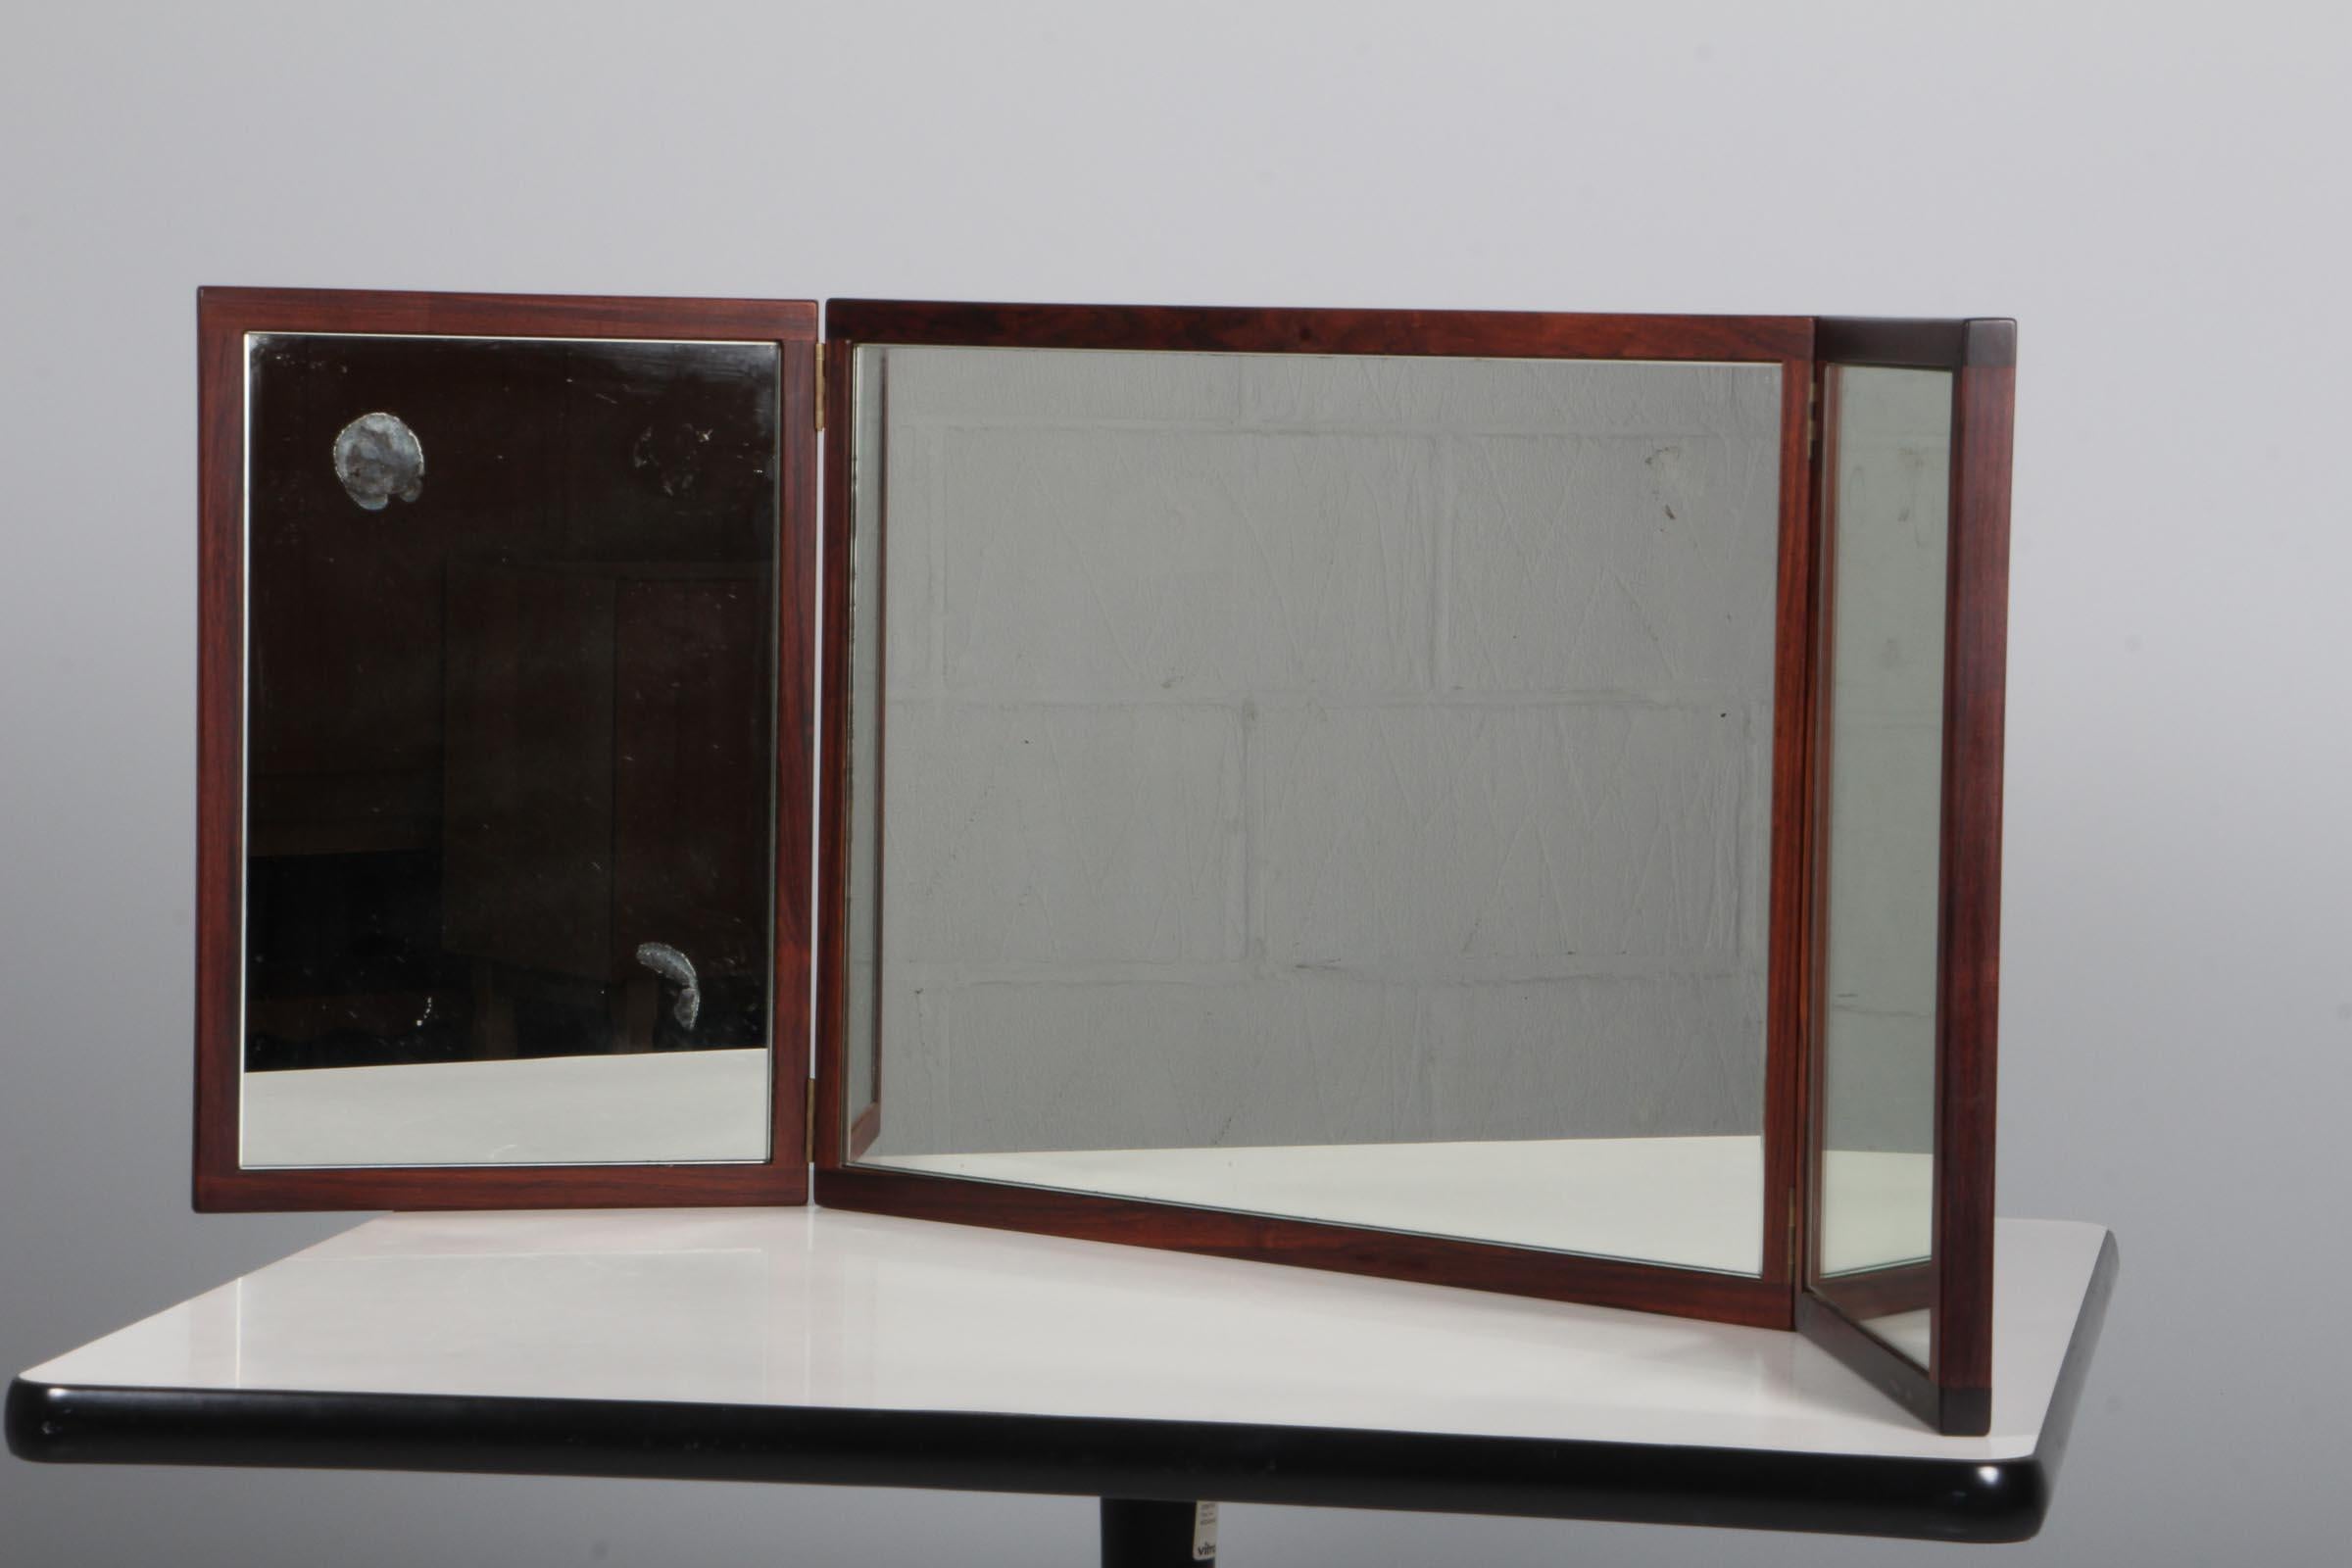 Aksel Kjersgaard. Klappbarer Spiegel aus Palisanderholz, Dänemark, 1960er Jahre.

Maße: H. 43 B. 58/116 T. 45.